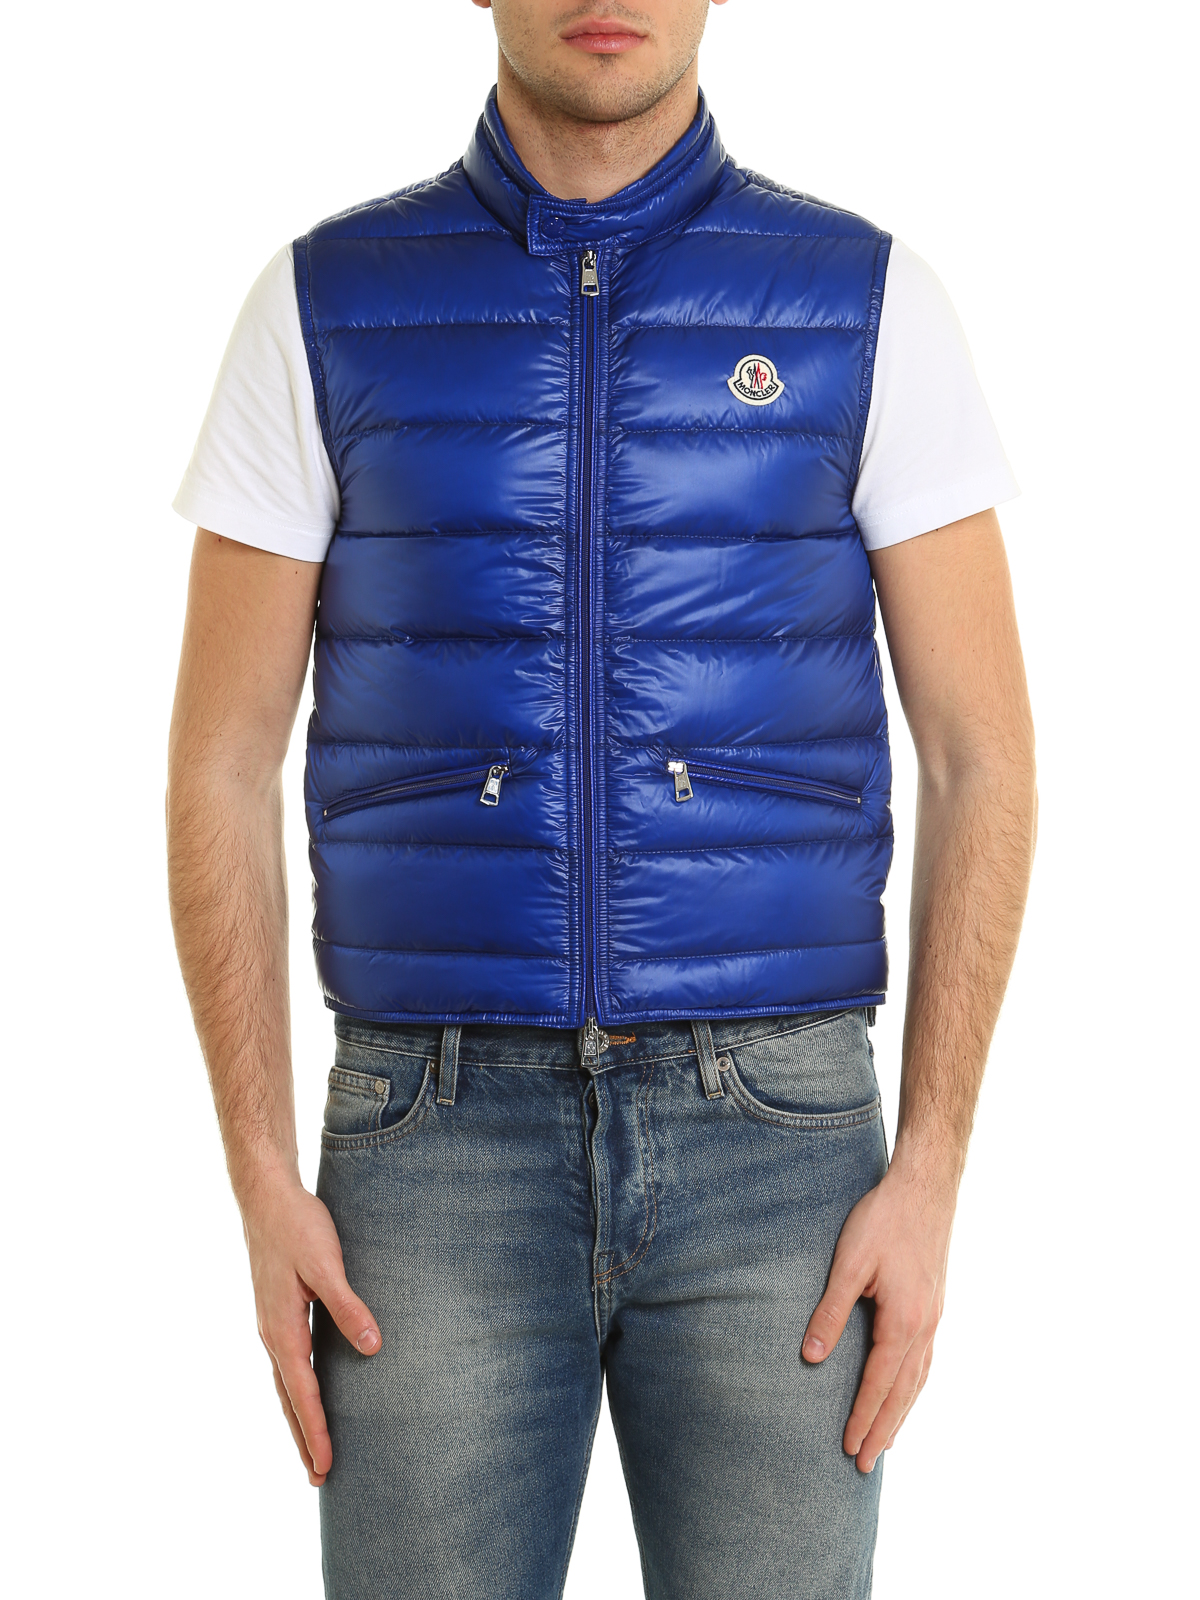 Gui padded vest by Moncler - padded jackets | Shop online at iKRIX.com